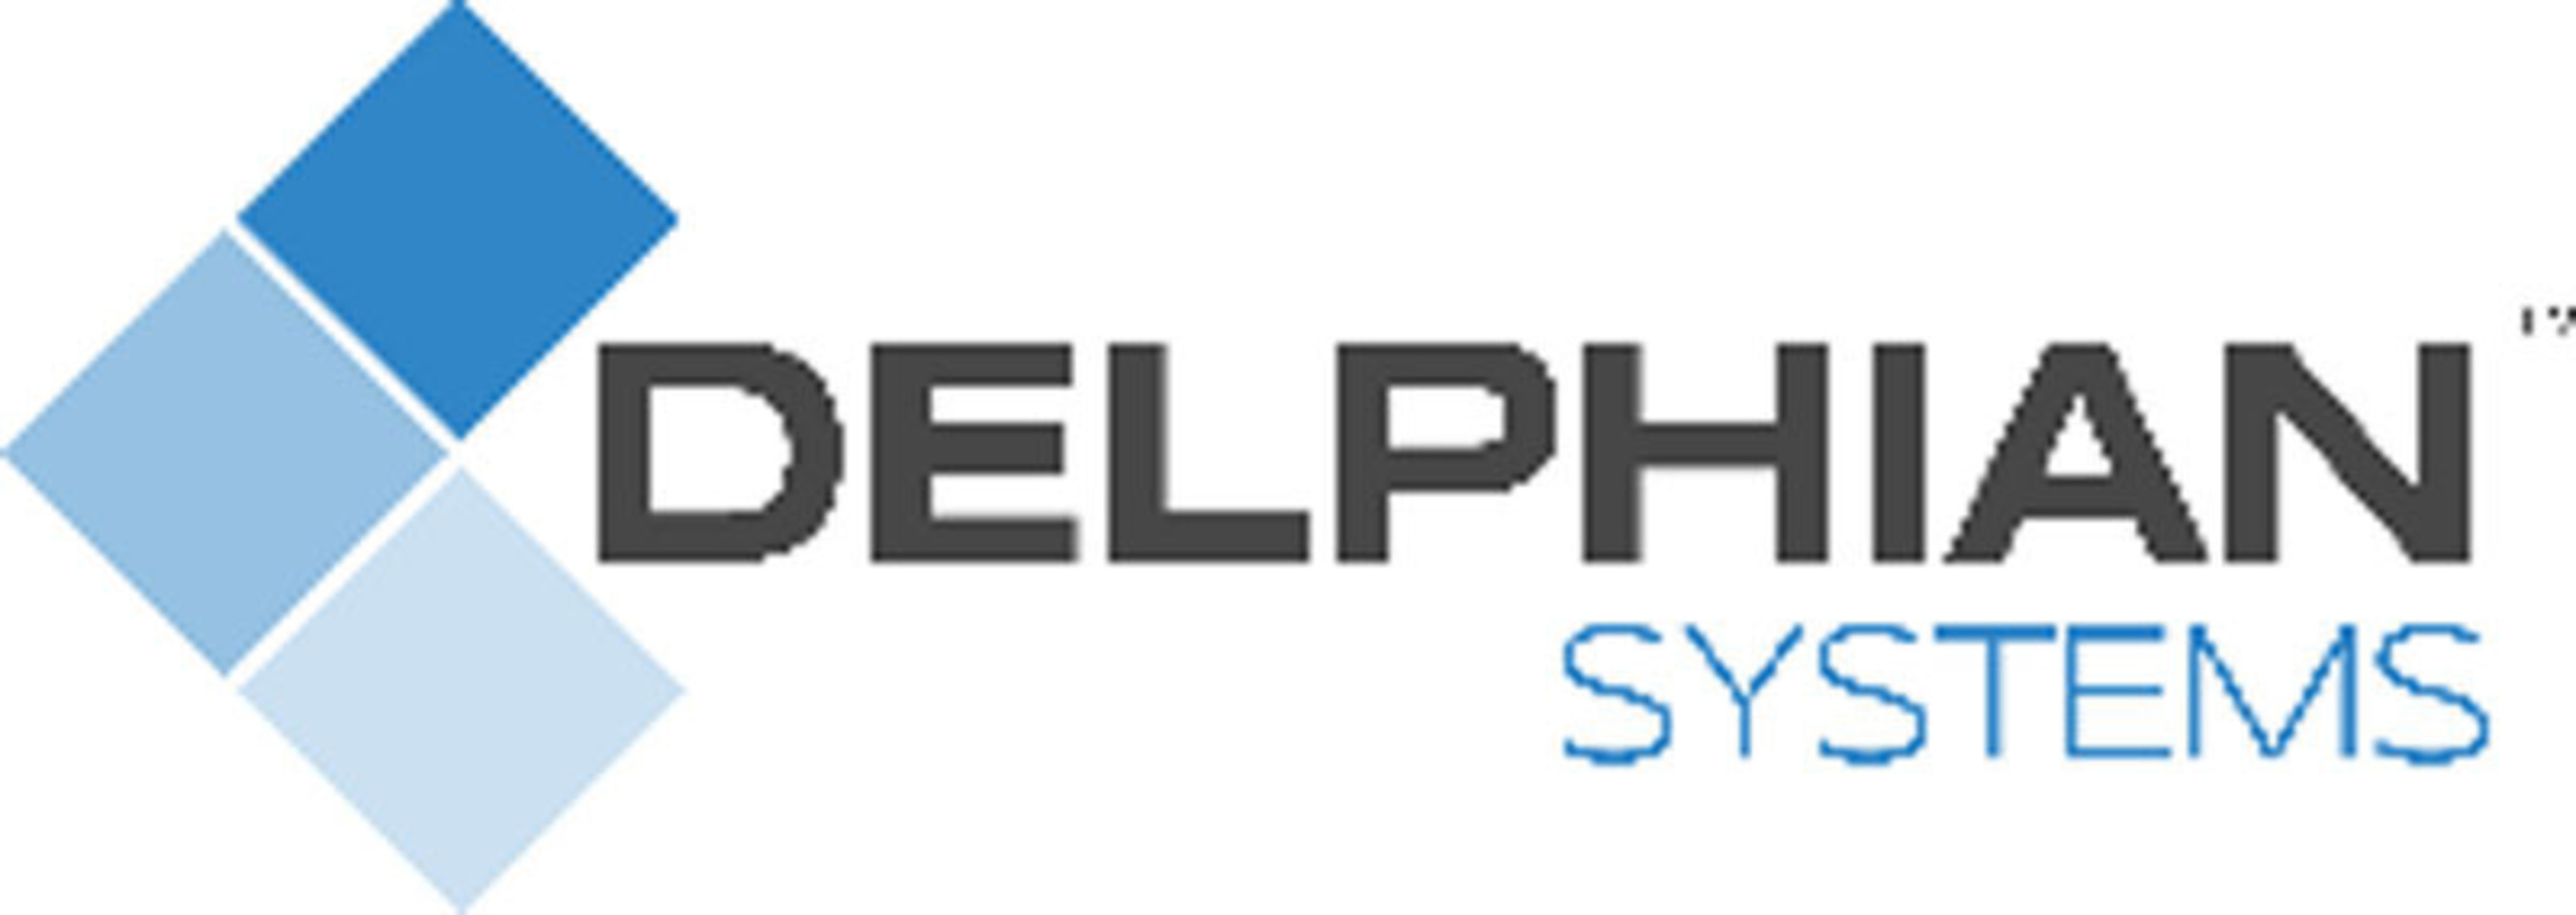 Delphian Systems Logo. (PRNewsFoto/Delphian Systems) (PRNewsFoto/DELPHIAN SYSTEMS)